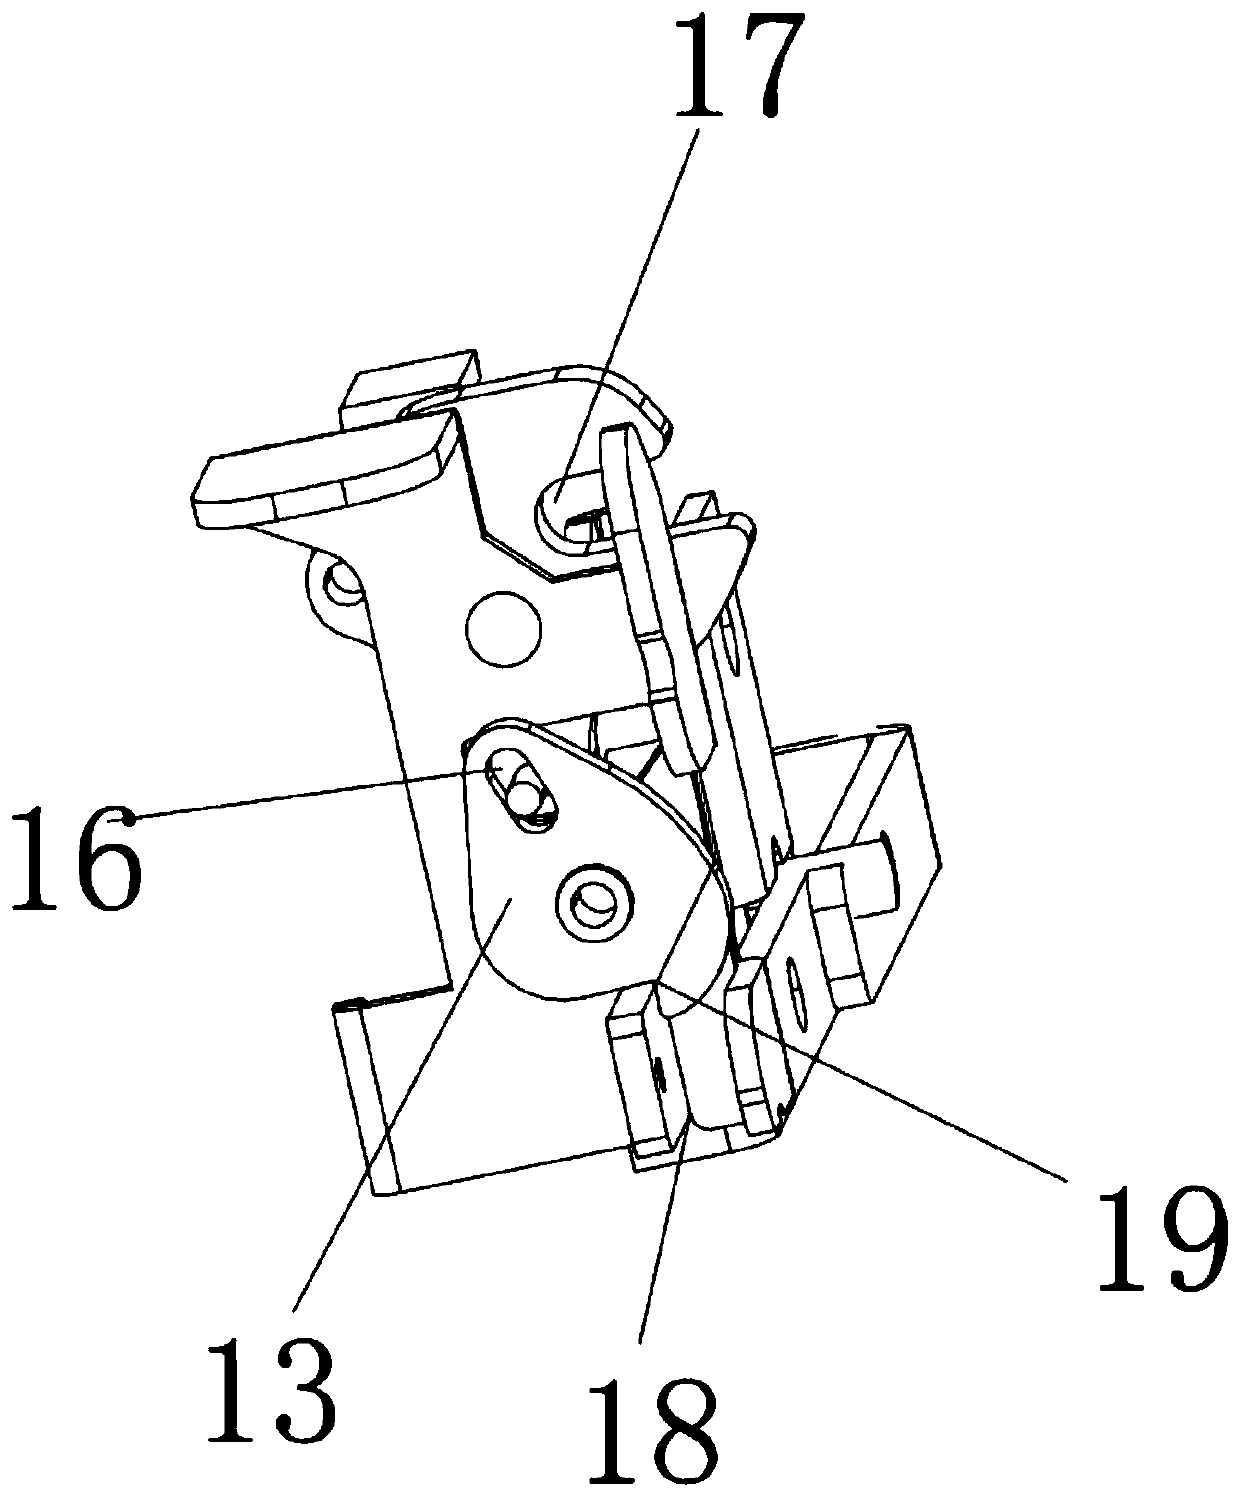 Double-hook pistol box locking mechanism